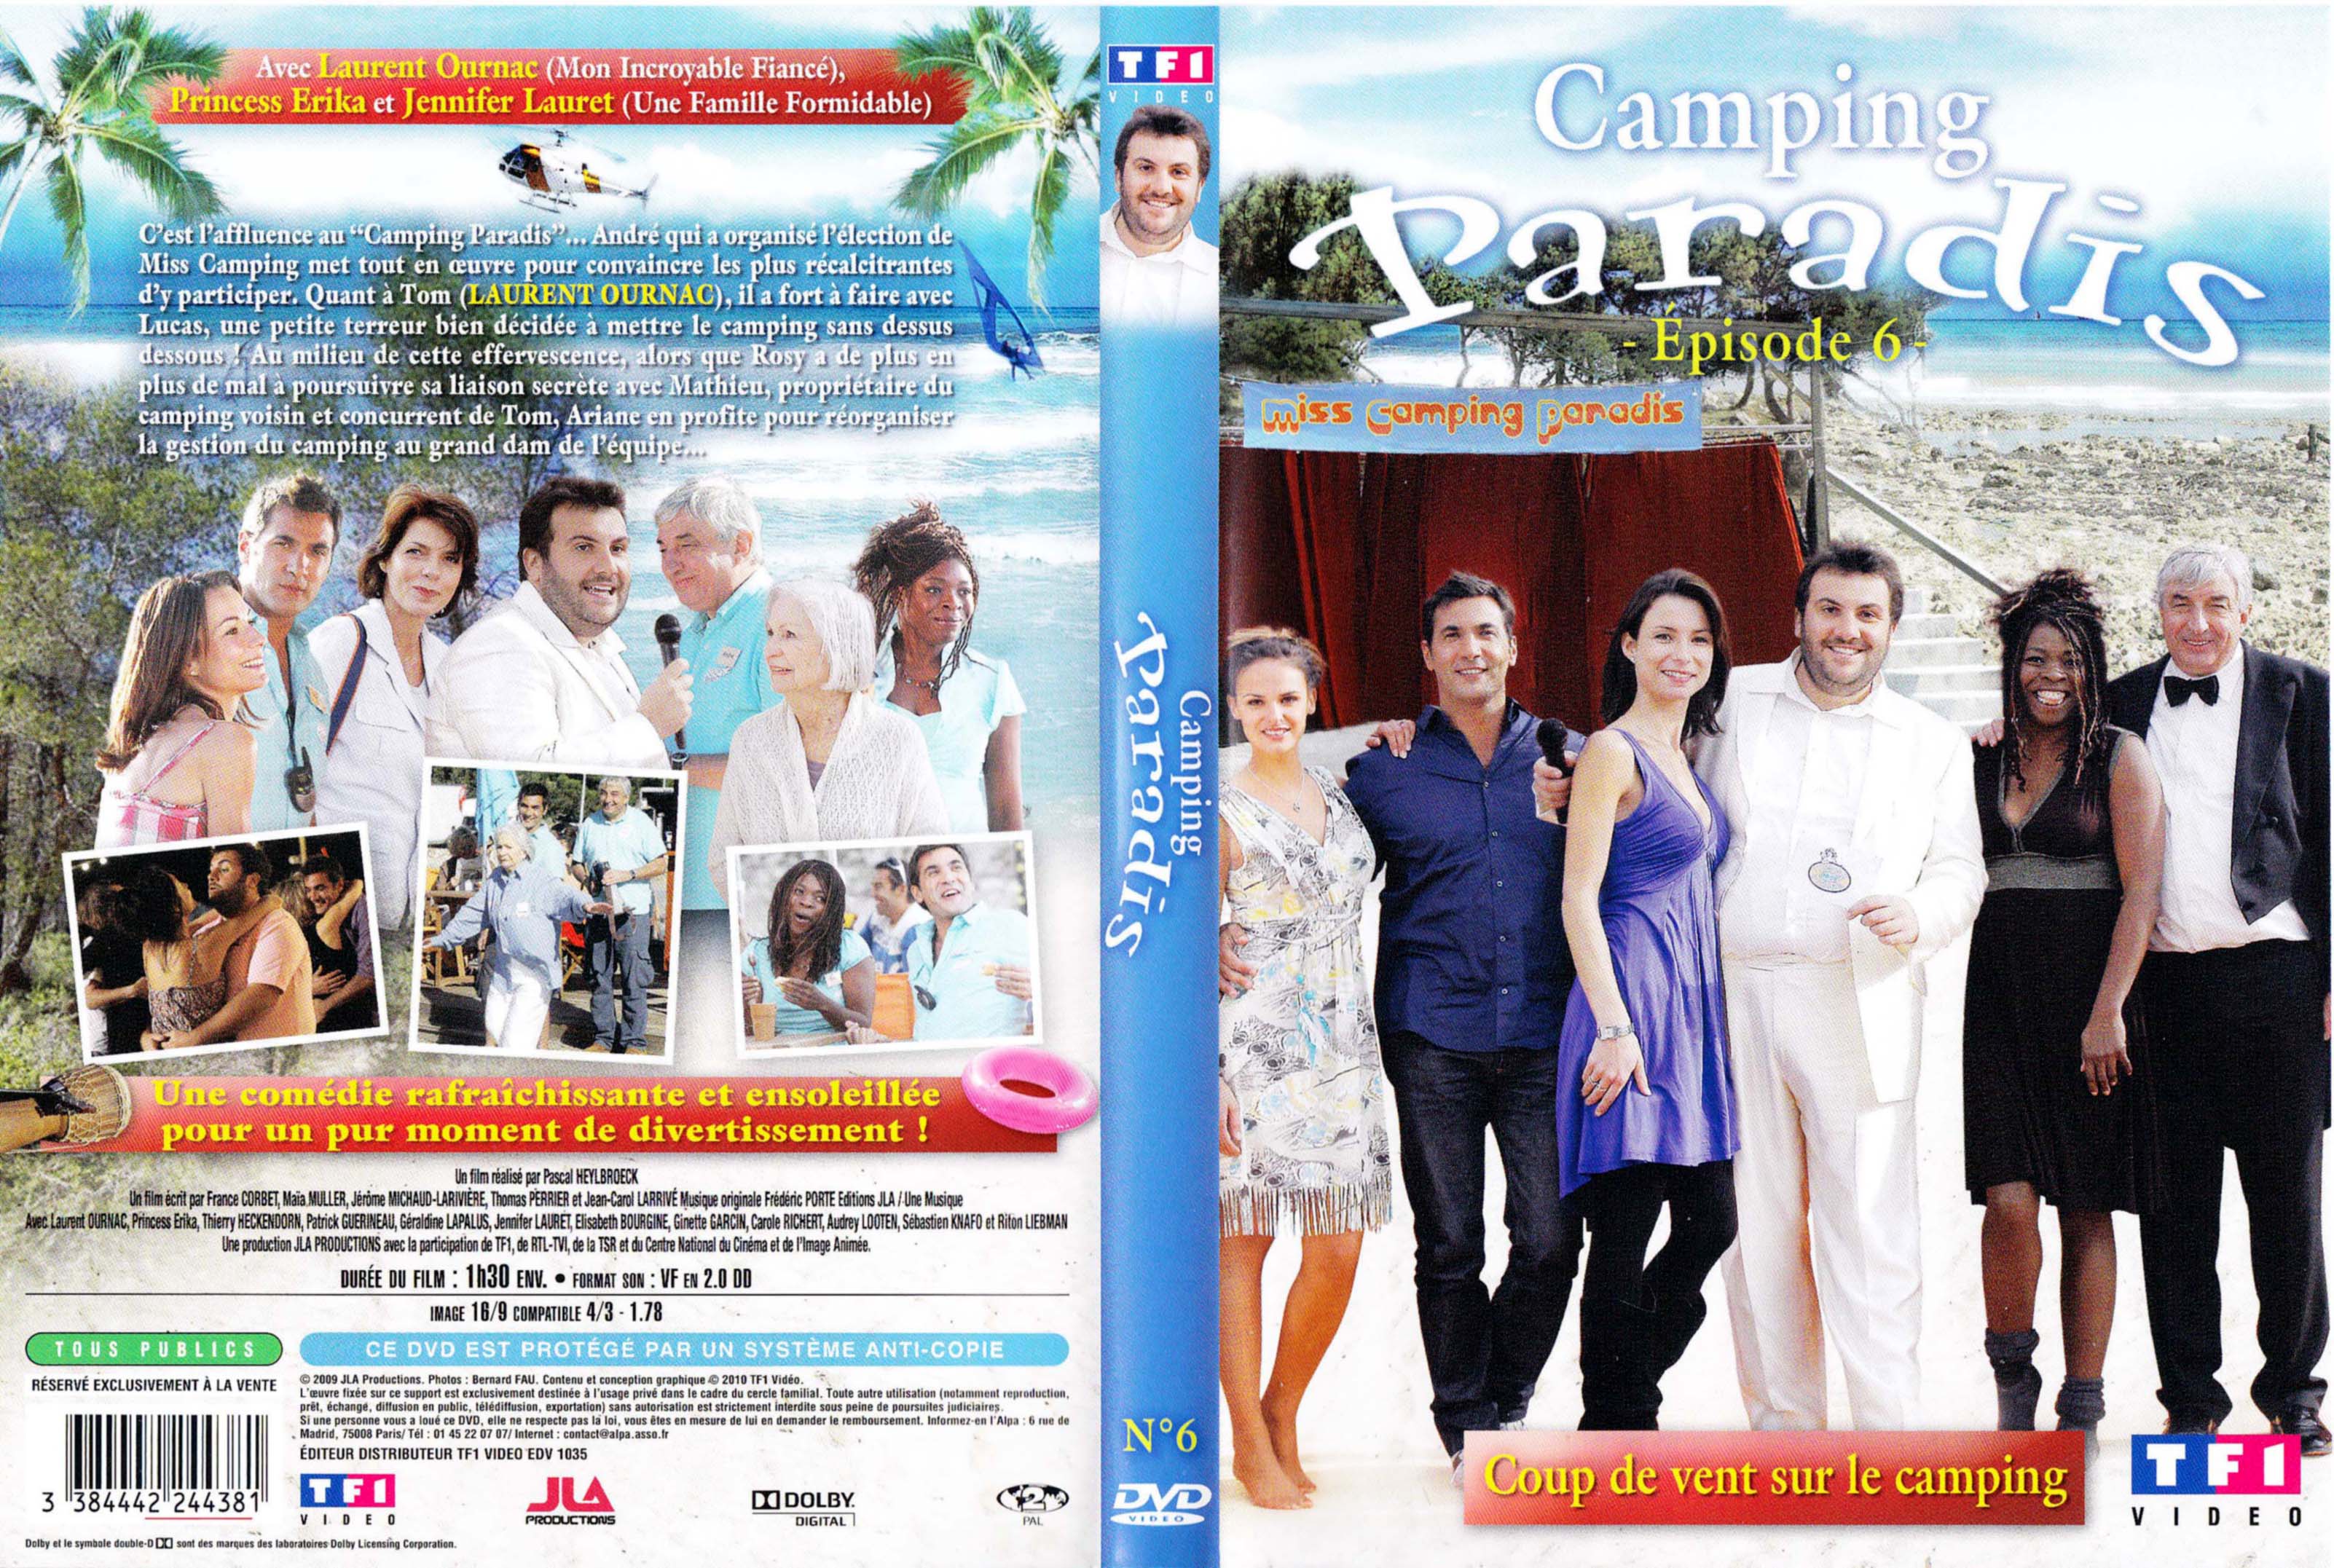 Jaquette DVD Camping Paradis vol 06